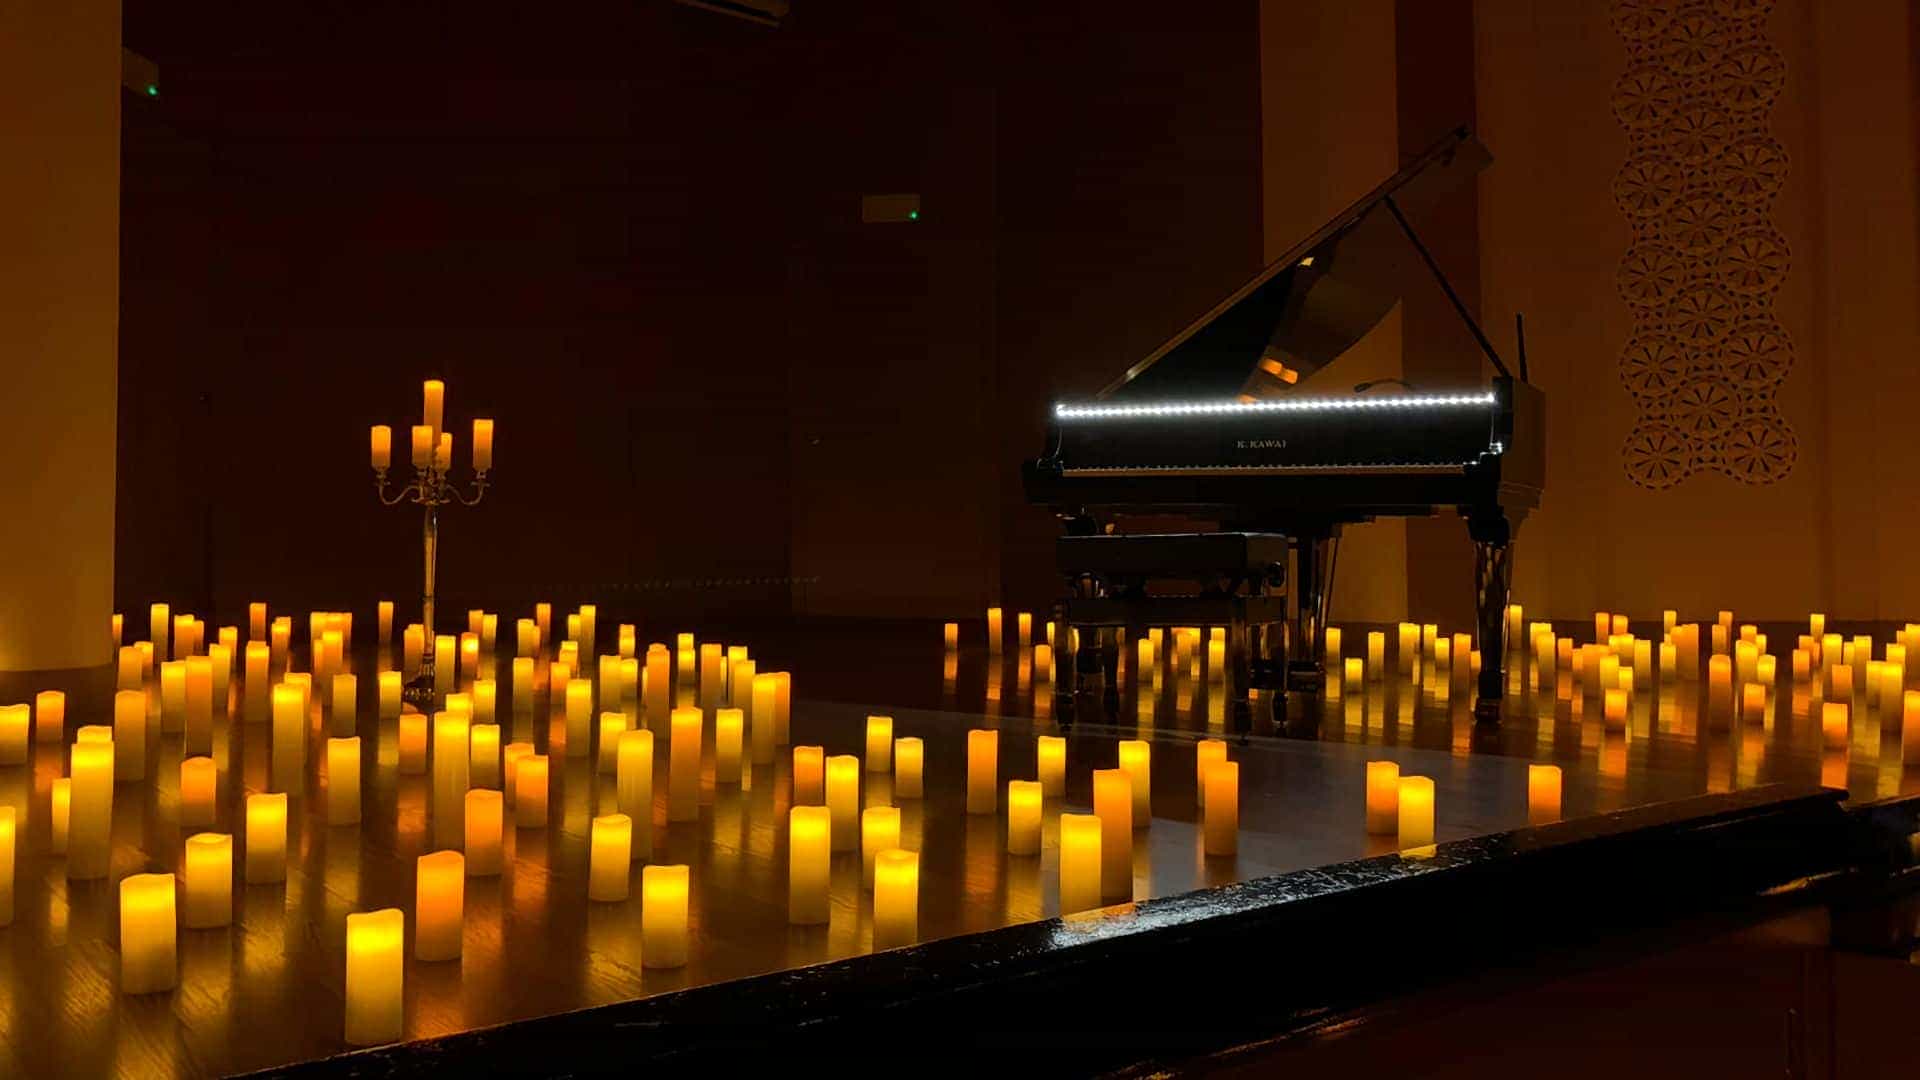 Candlelight: Tribute to Ludovico Einaudi